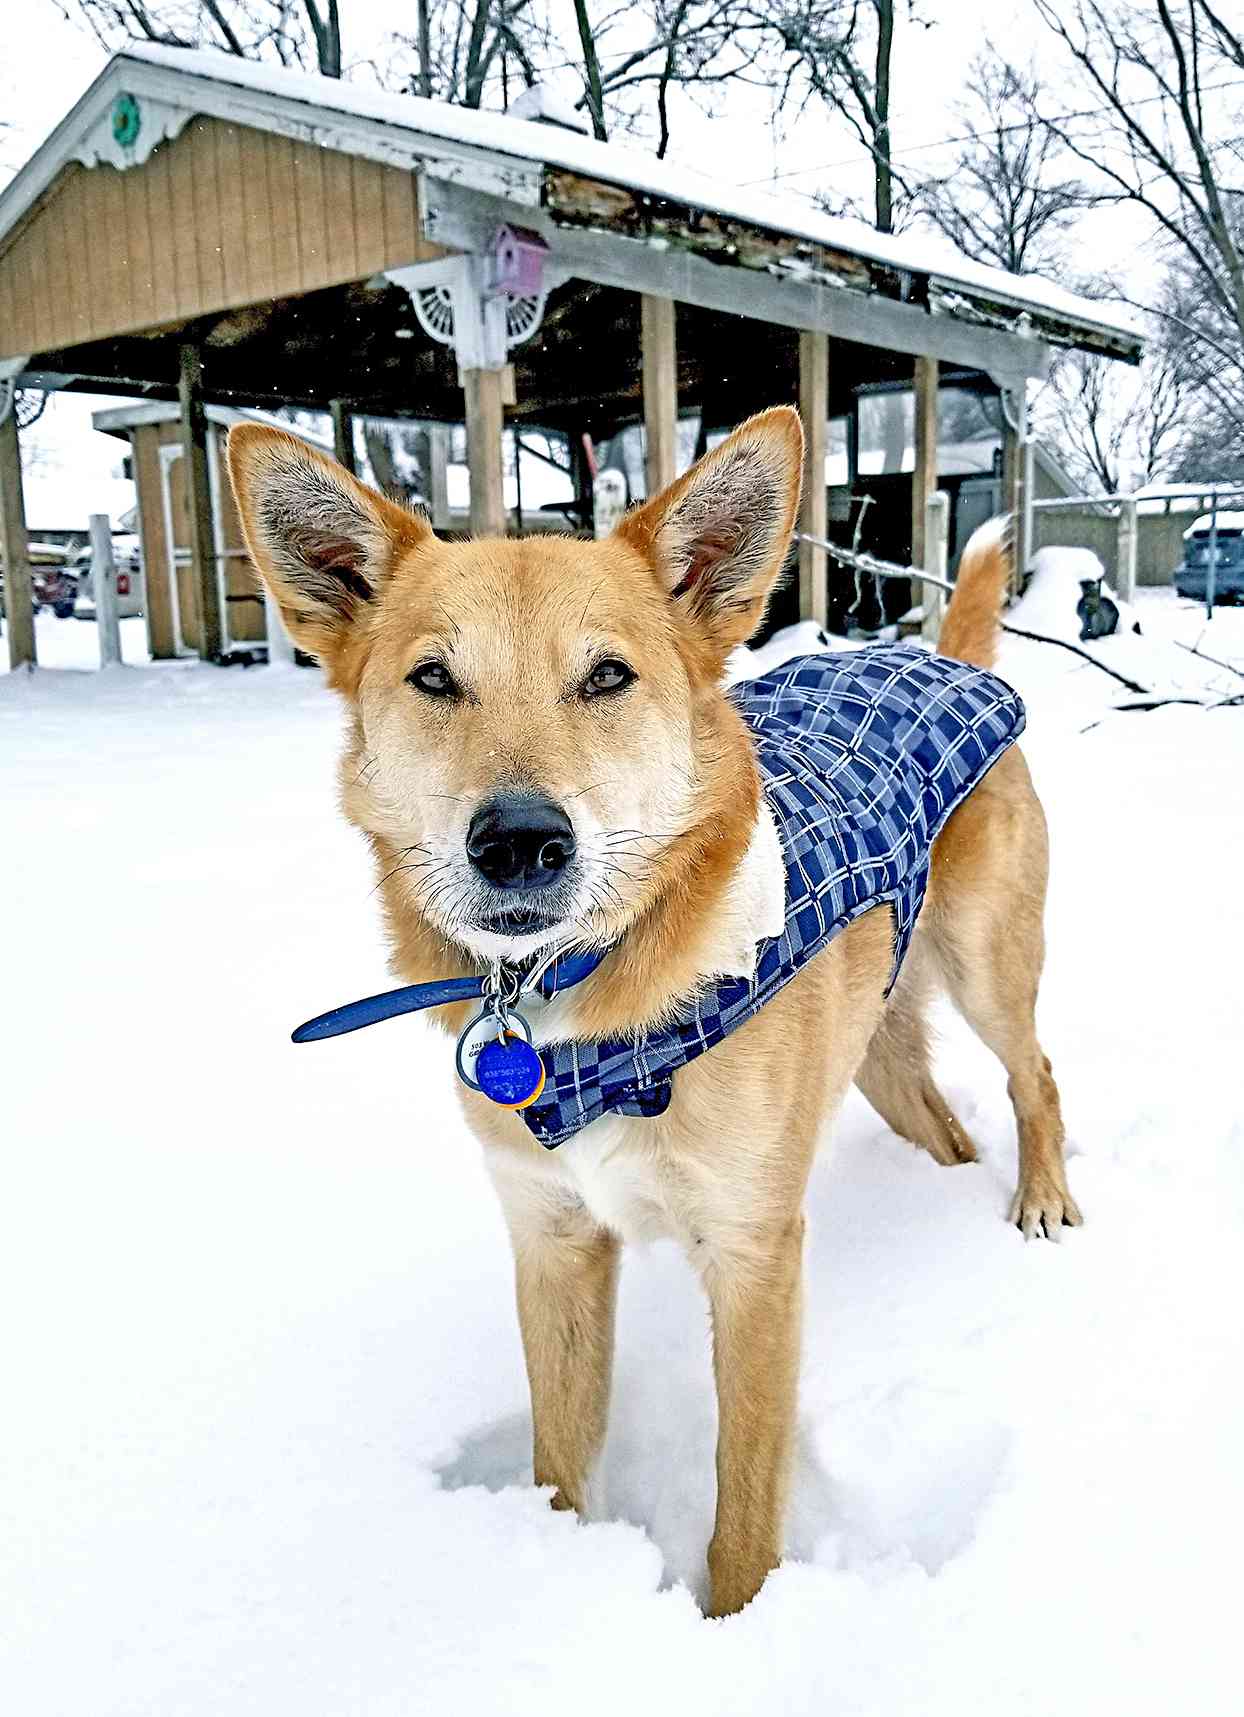 carolina dog wearing a blue winter jacket standing in snow